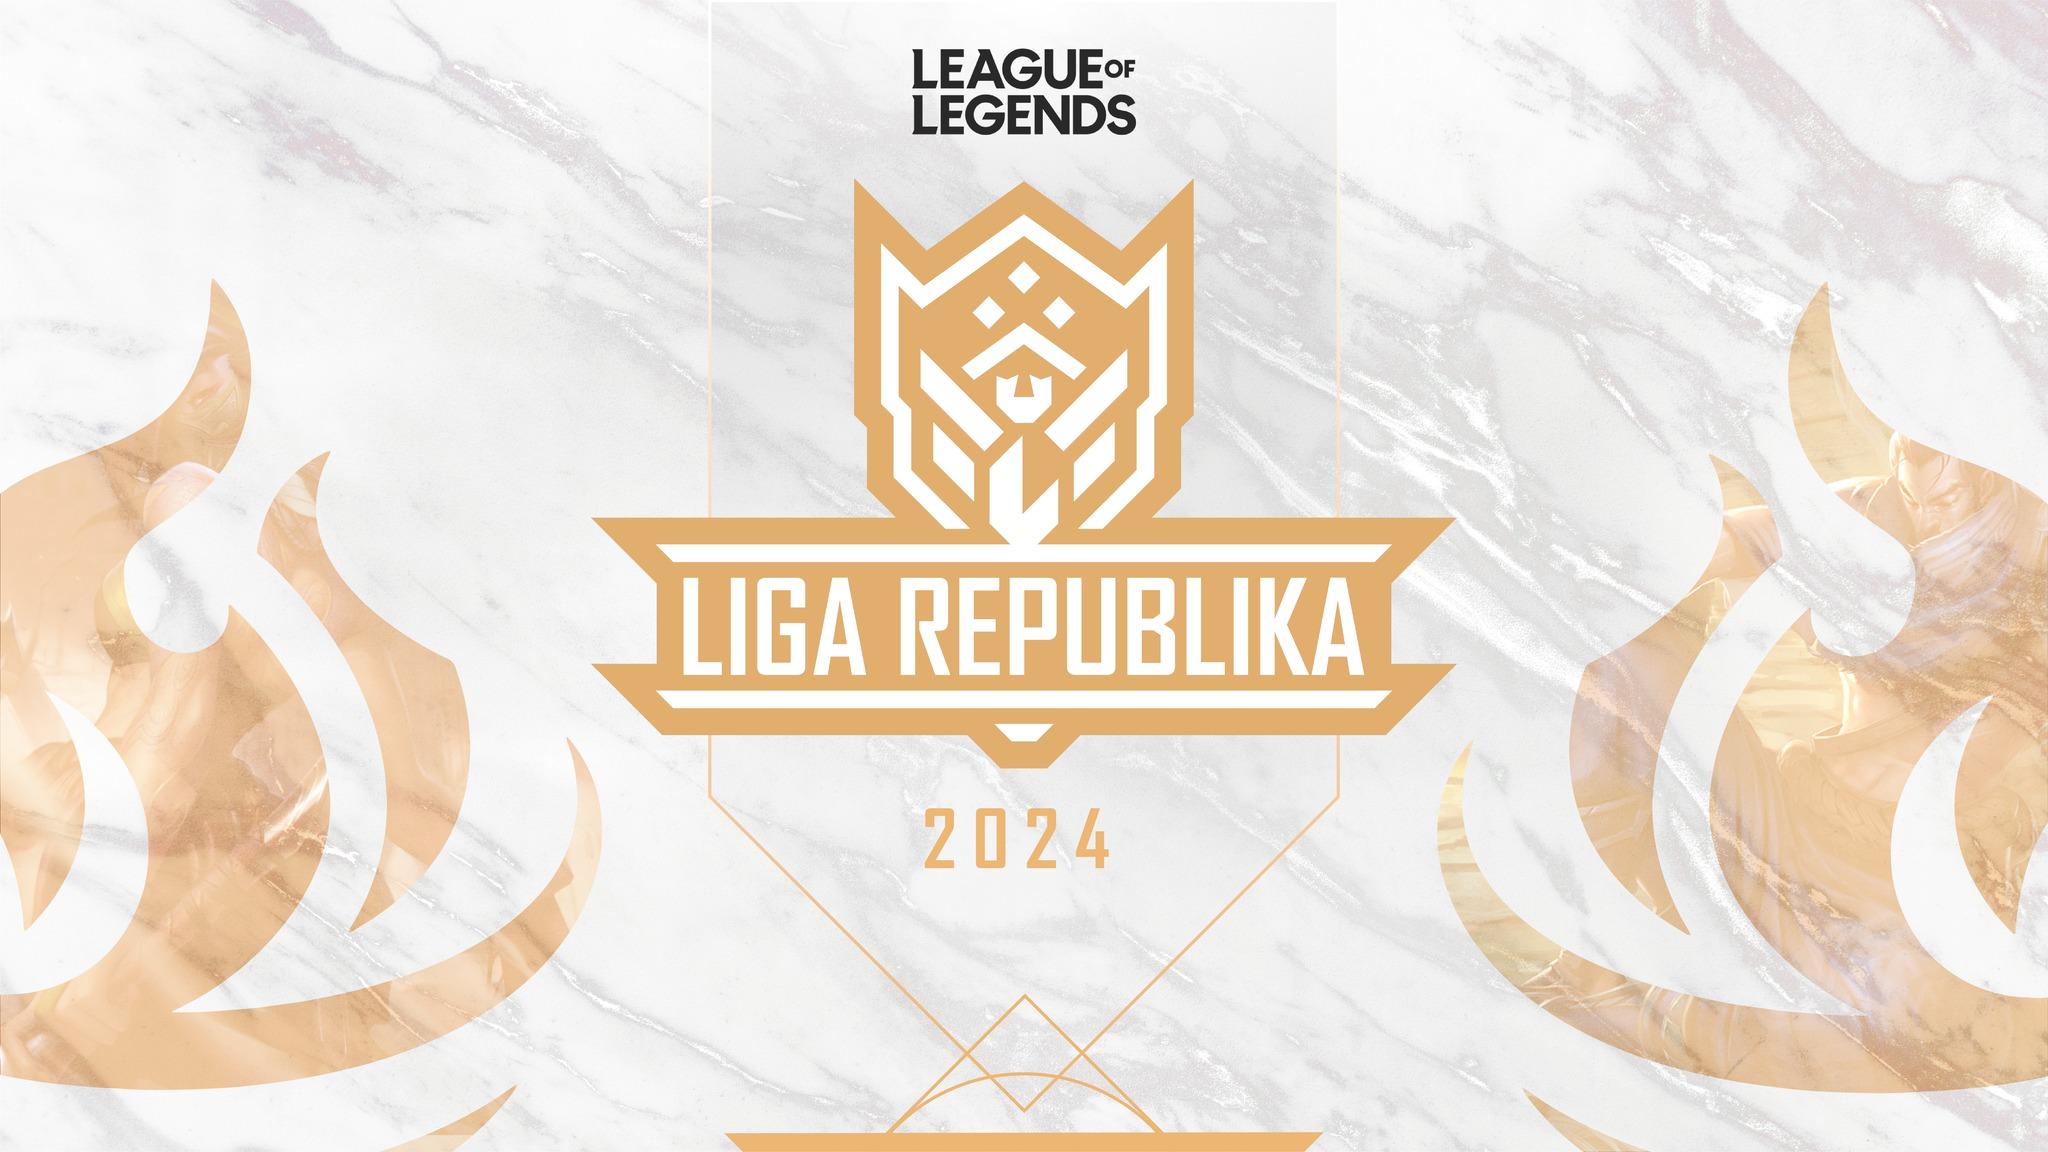 Liga Republika 2024 League of Legends Esports